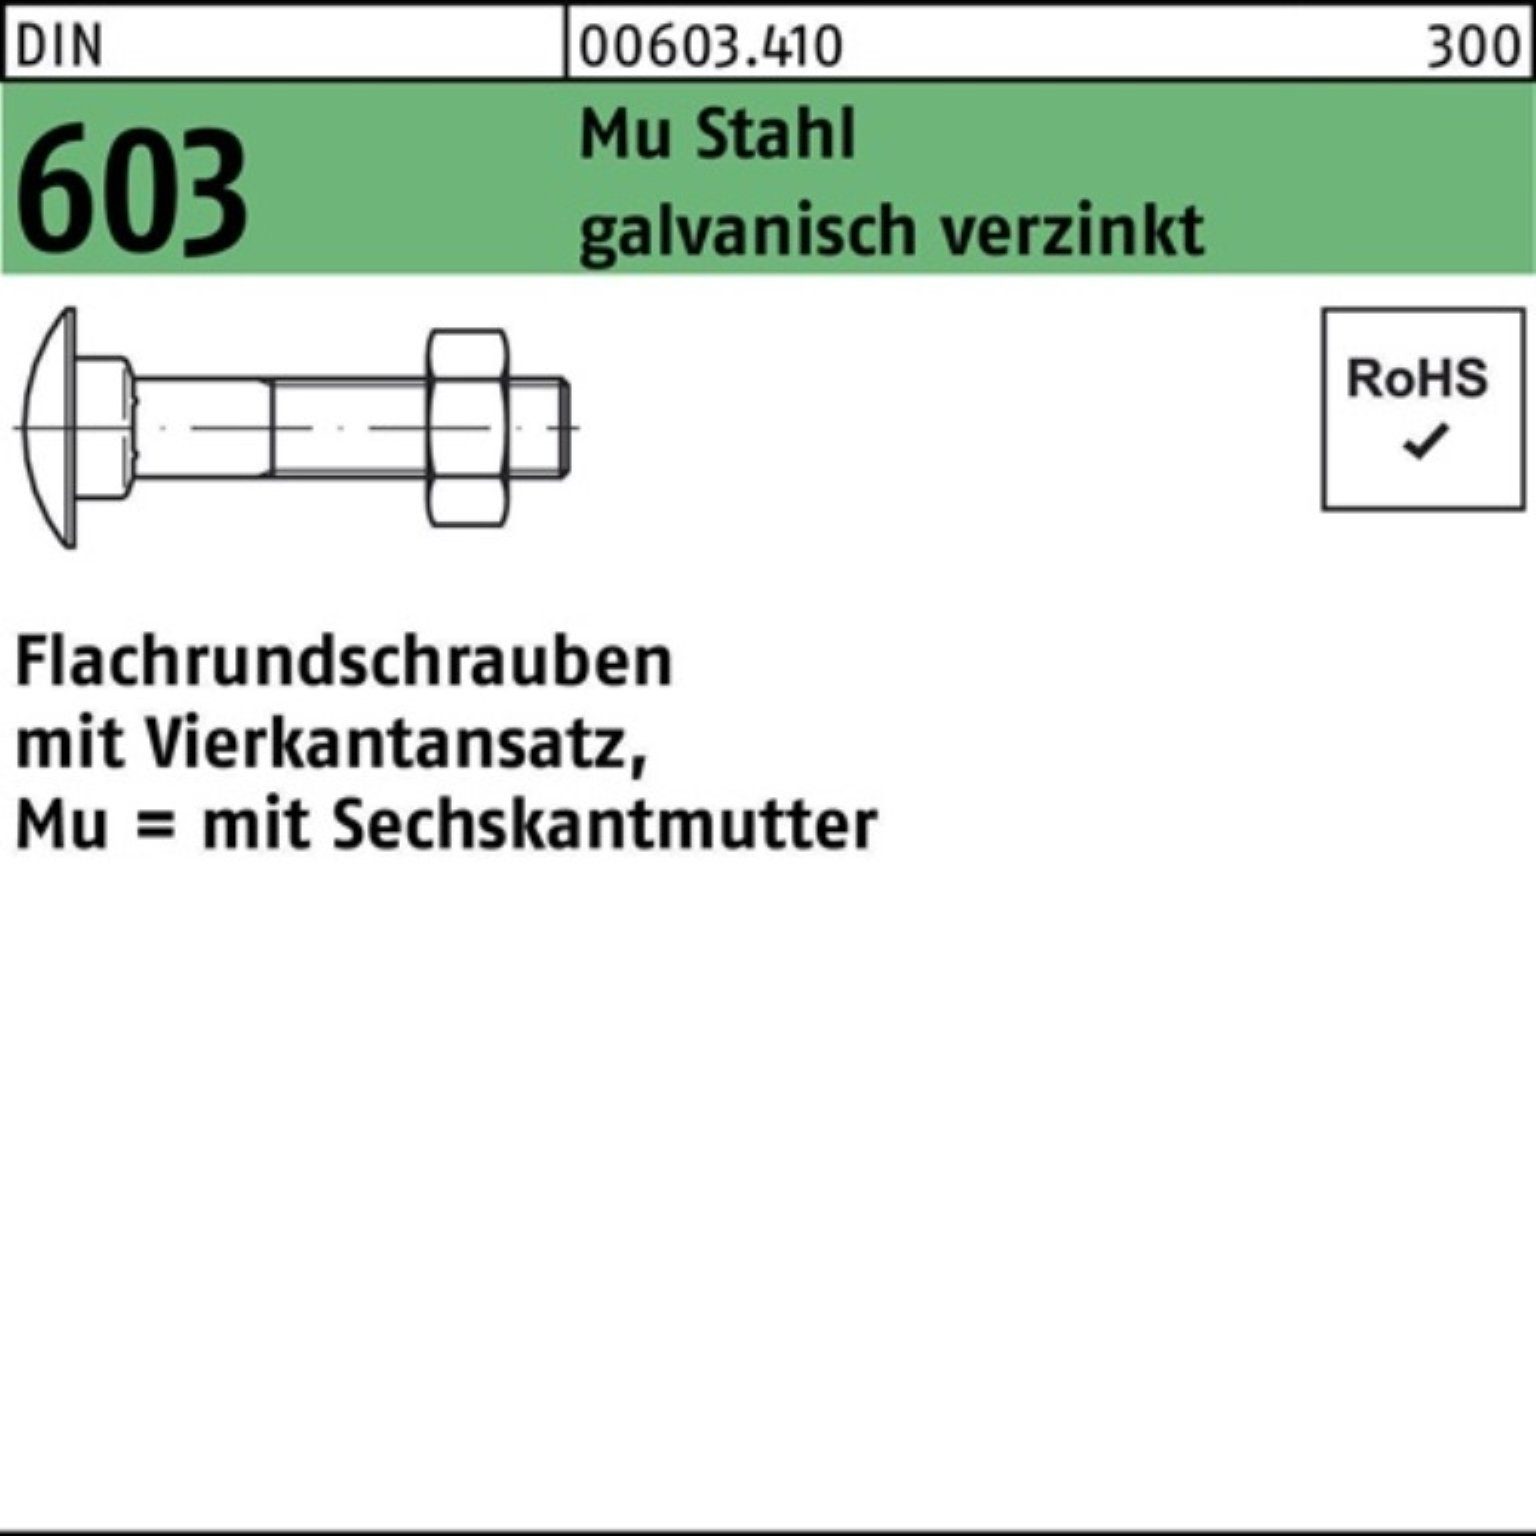 Reyher Schraube 100er Pack Flachrundschraube DIN 603 Vierkantansatz/6-ktmutter M12x180